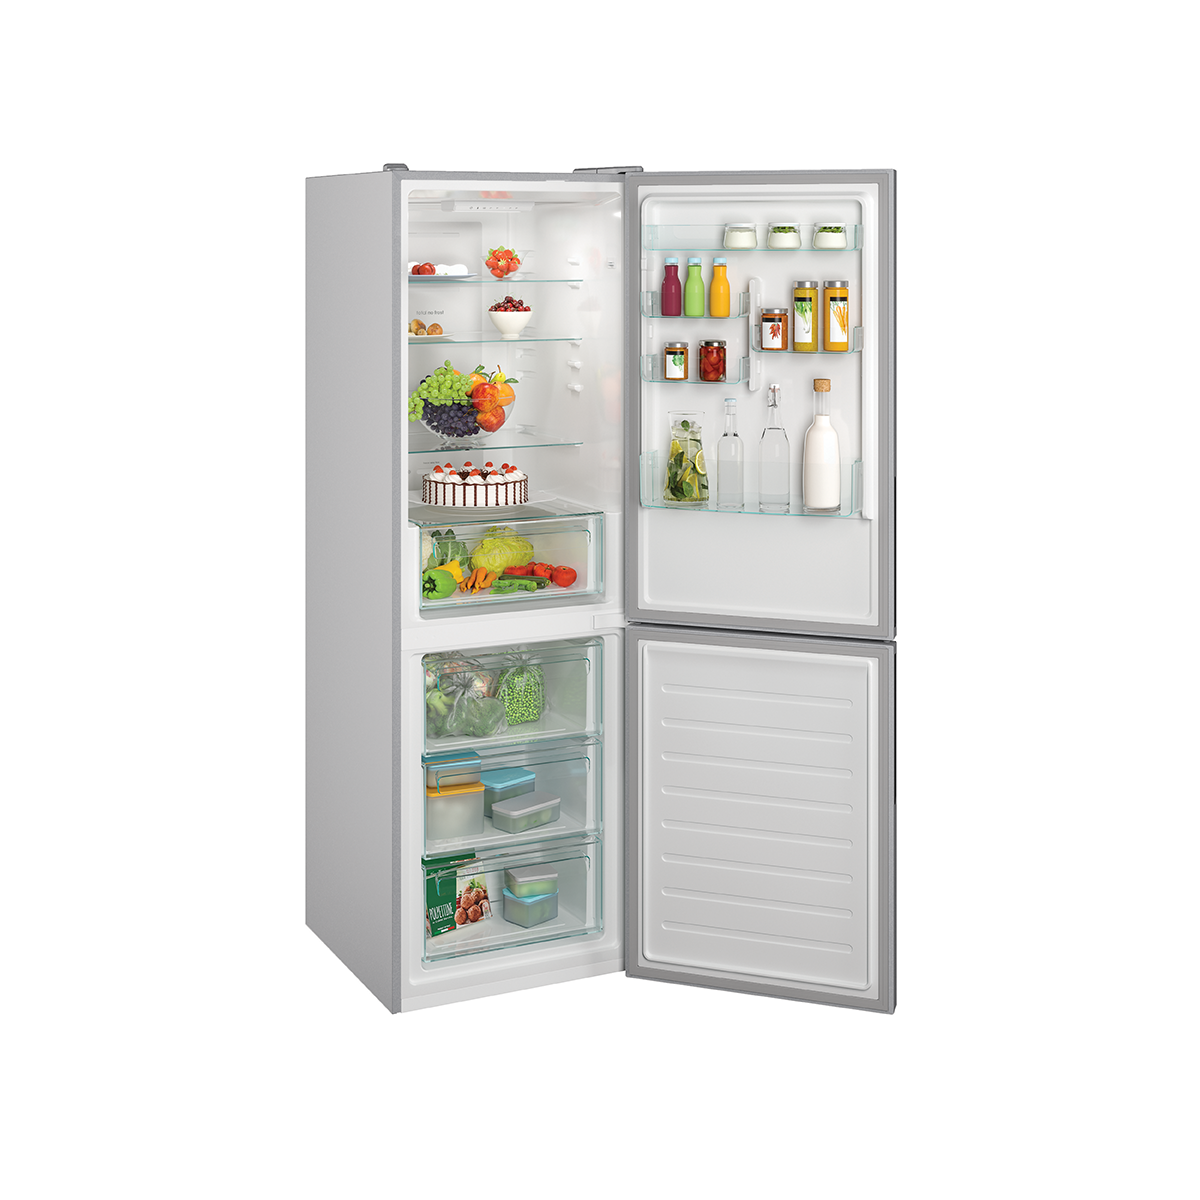 CCE3T618FS Refrigerator -  Free Standing Fresco - 185cm